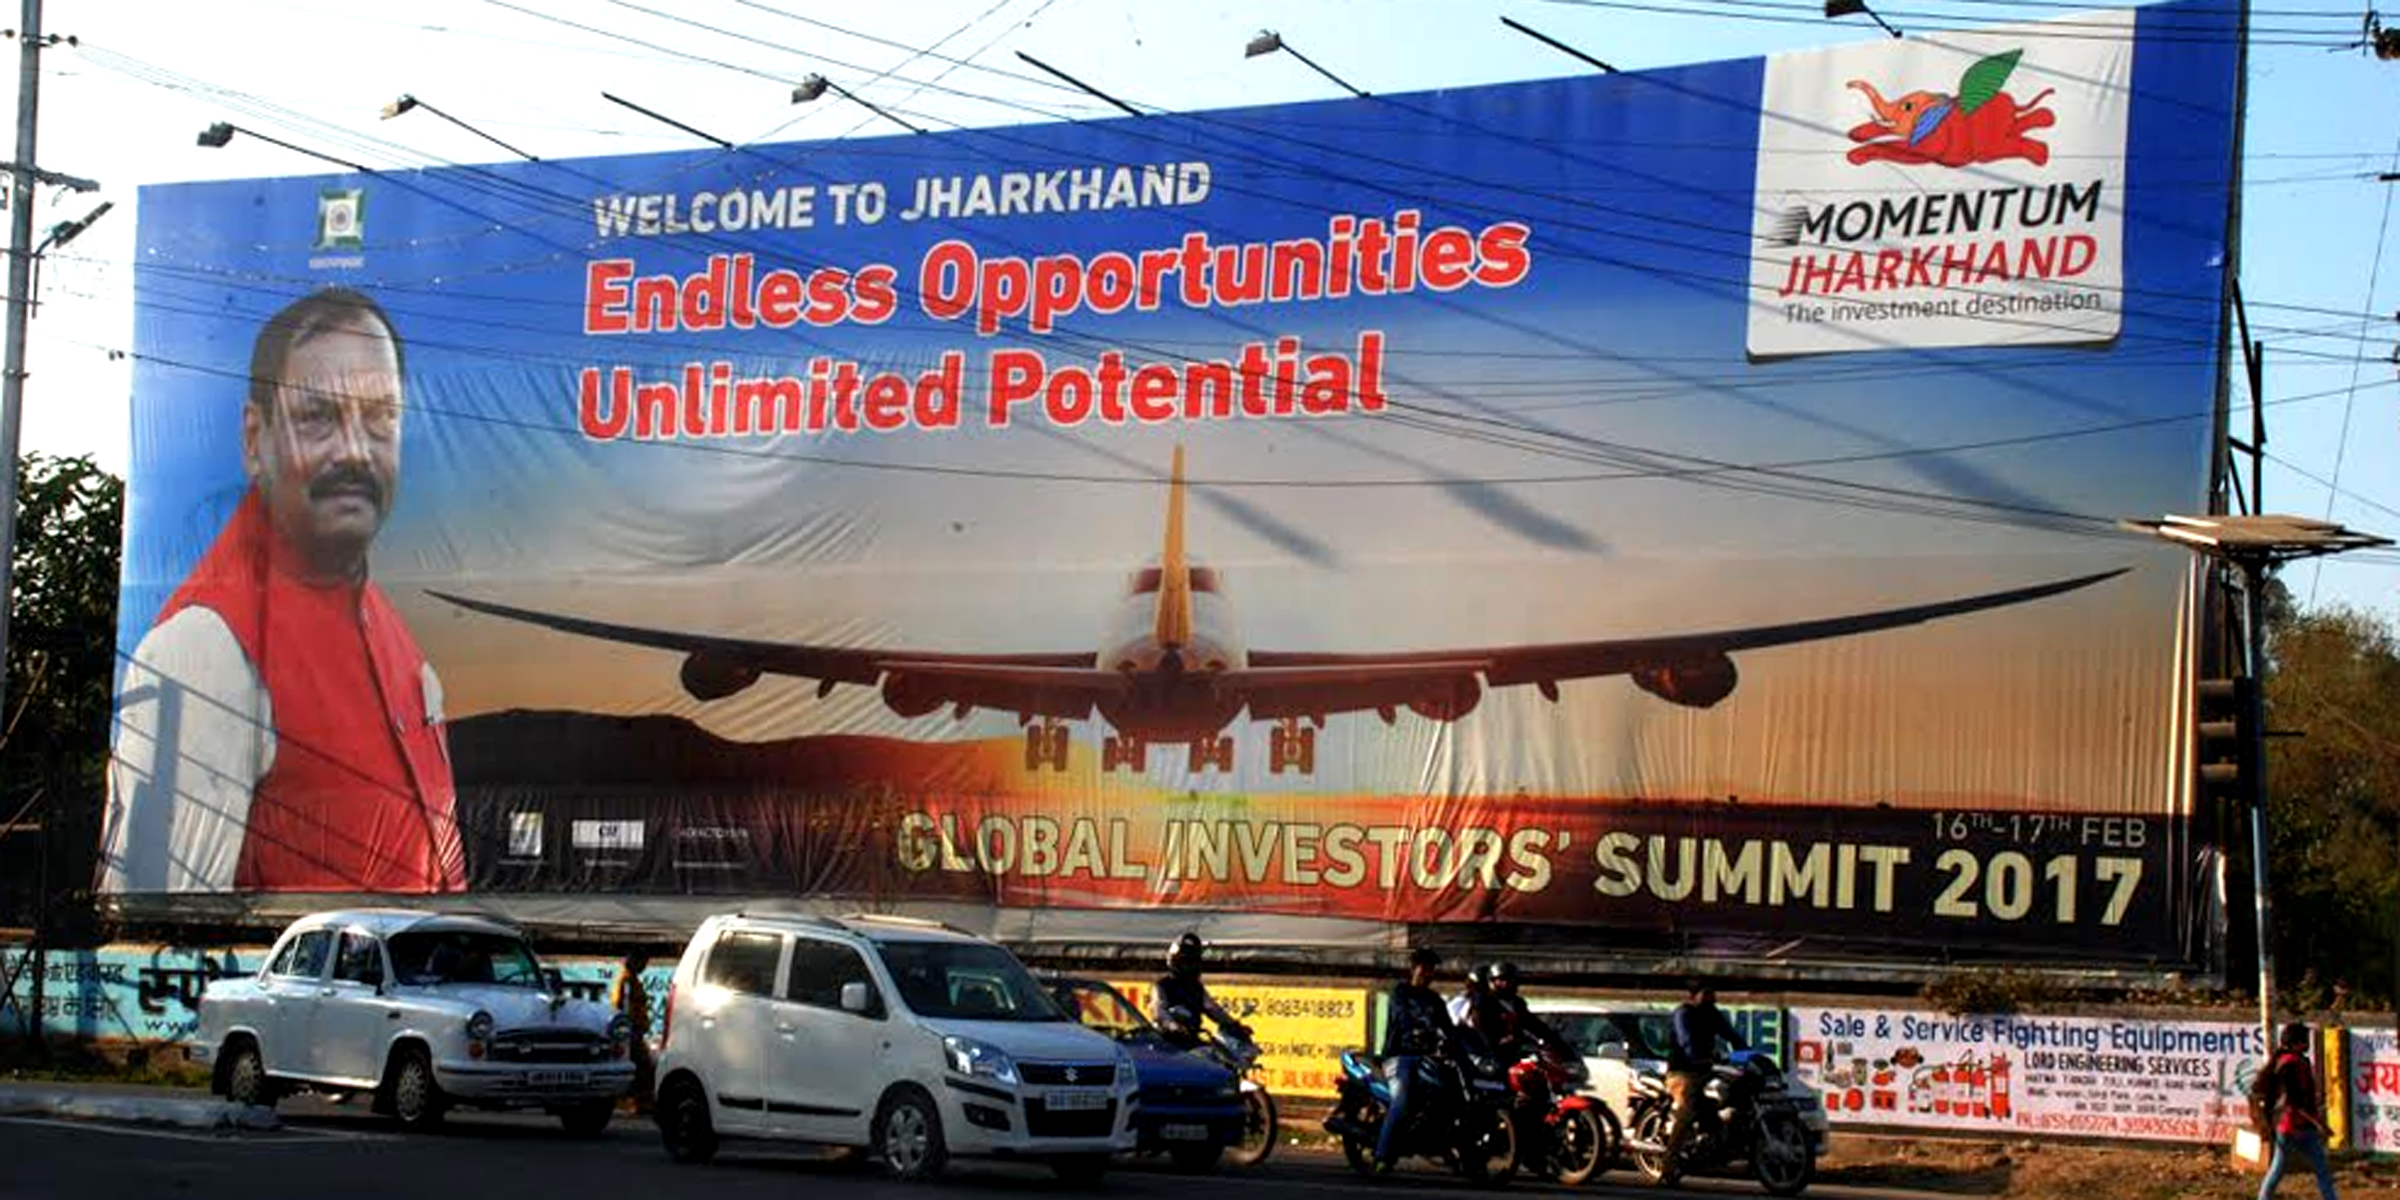 Hoardings for Momentum Jharkhand Global Investors Summit 2017